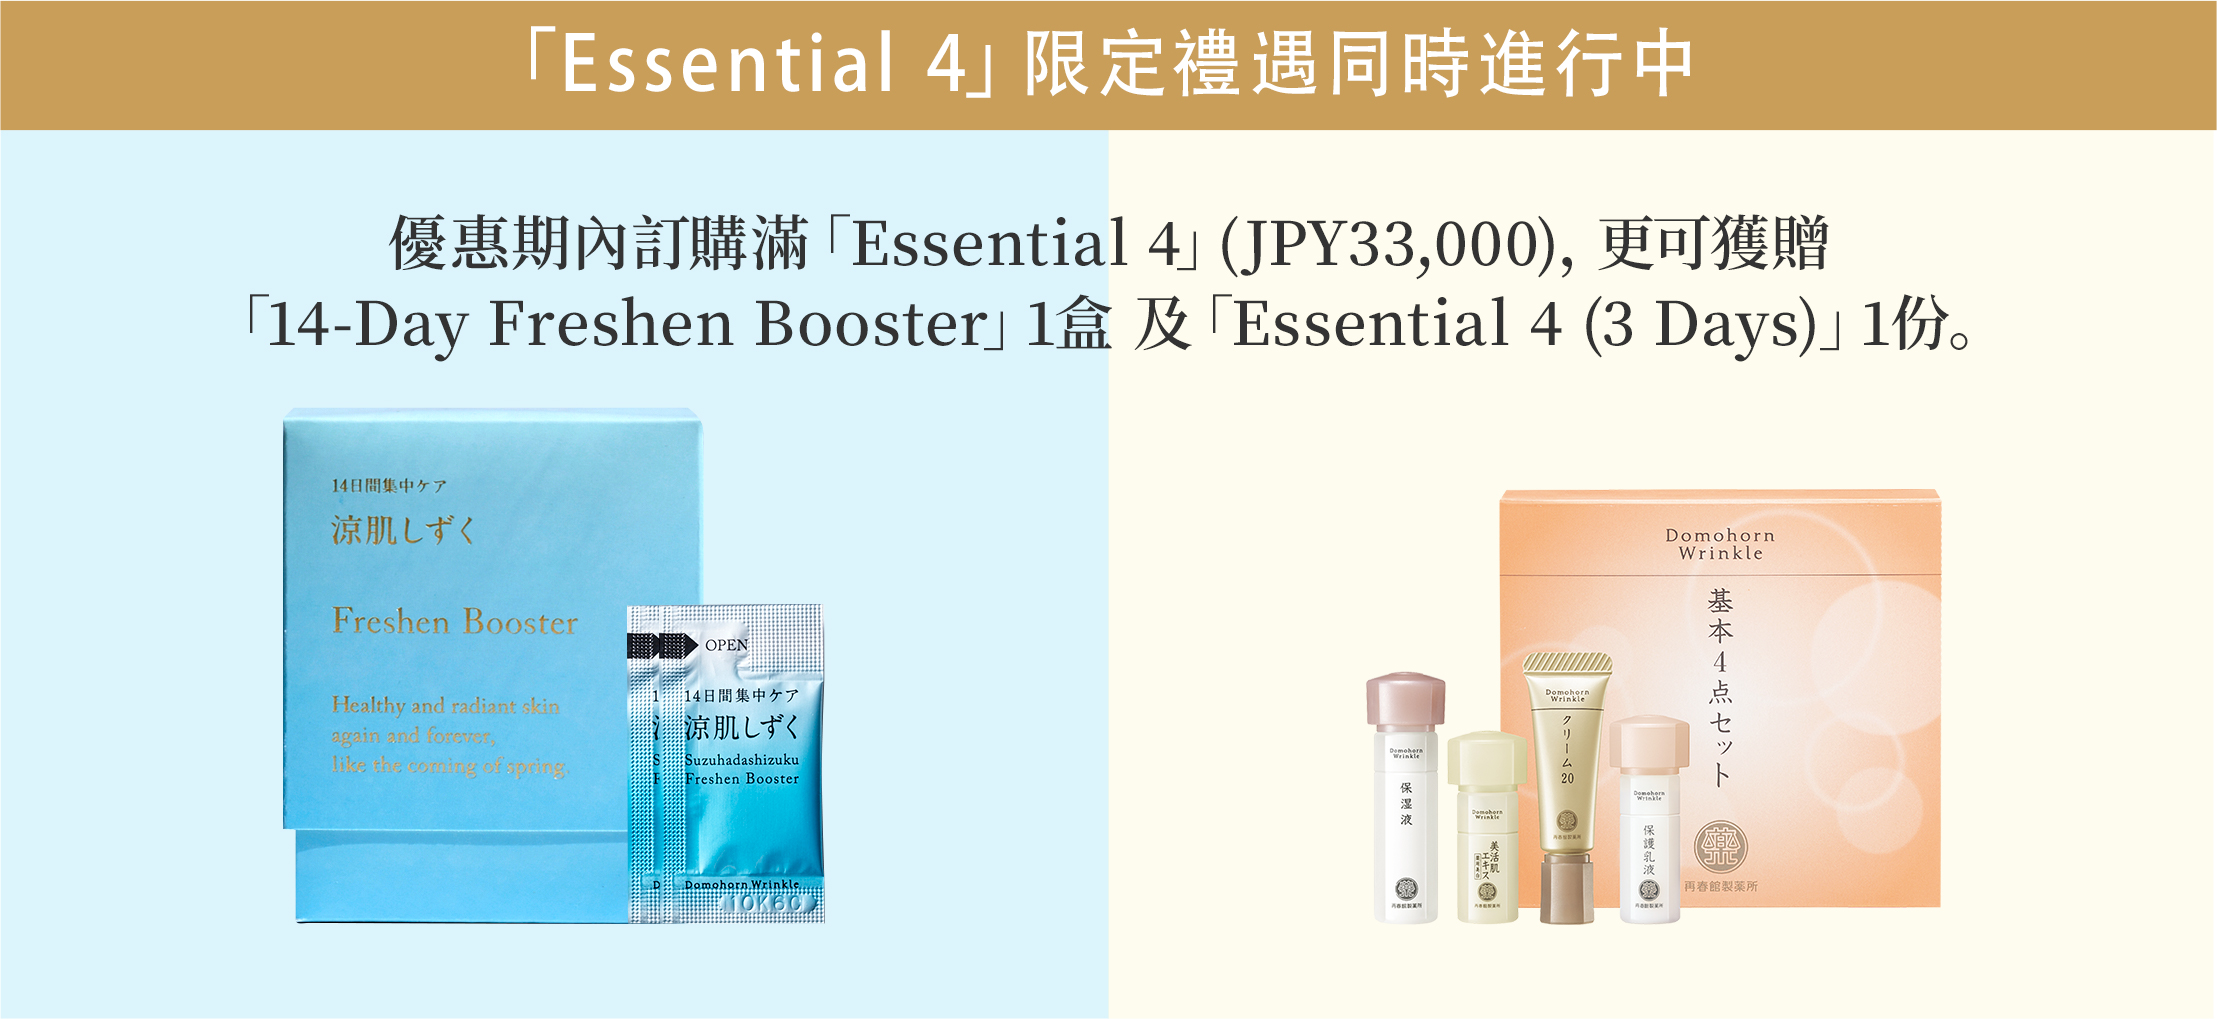 「Essential 4」限定禮遇同時進行中 優惠期內訂購滿「Essential 4」(JPY33,000)，更可獲贈 「14-Day Freshen Booster」1盒 及「Essential 4 (3 Days)」1份。